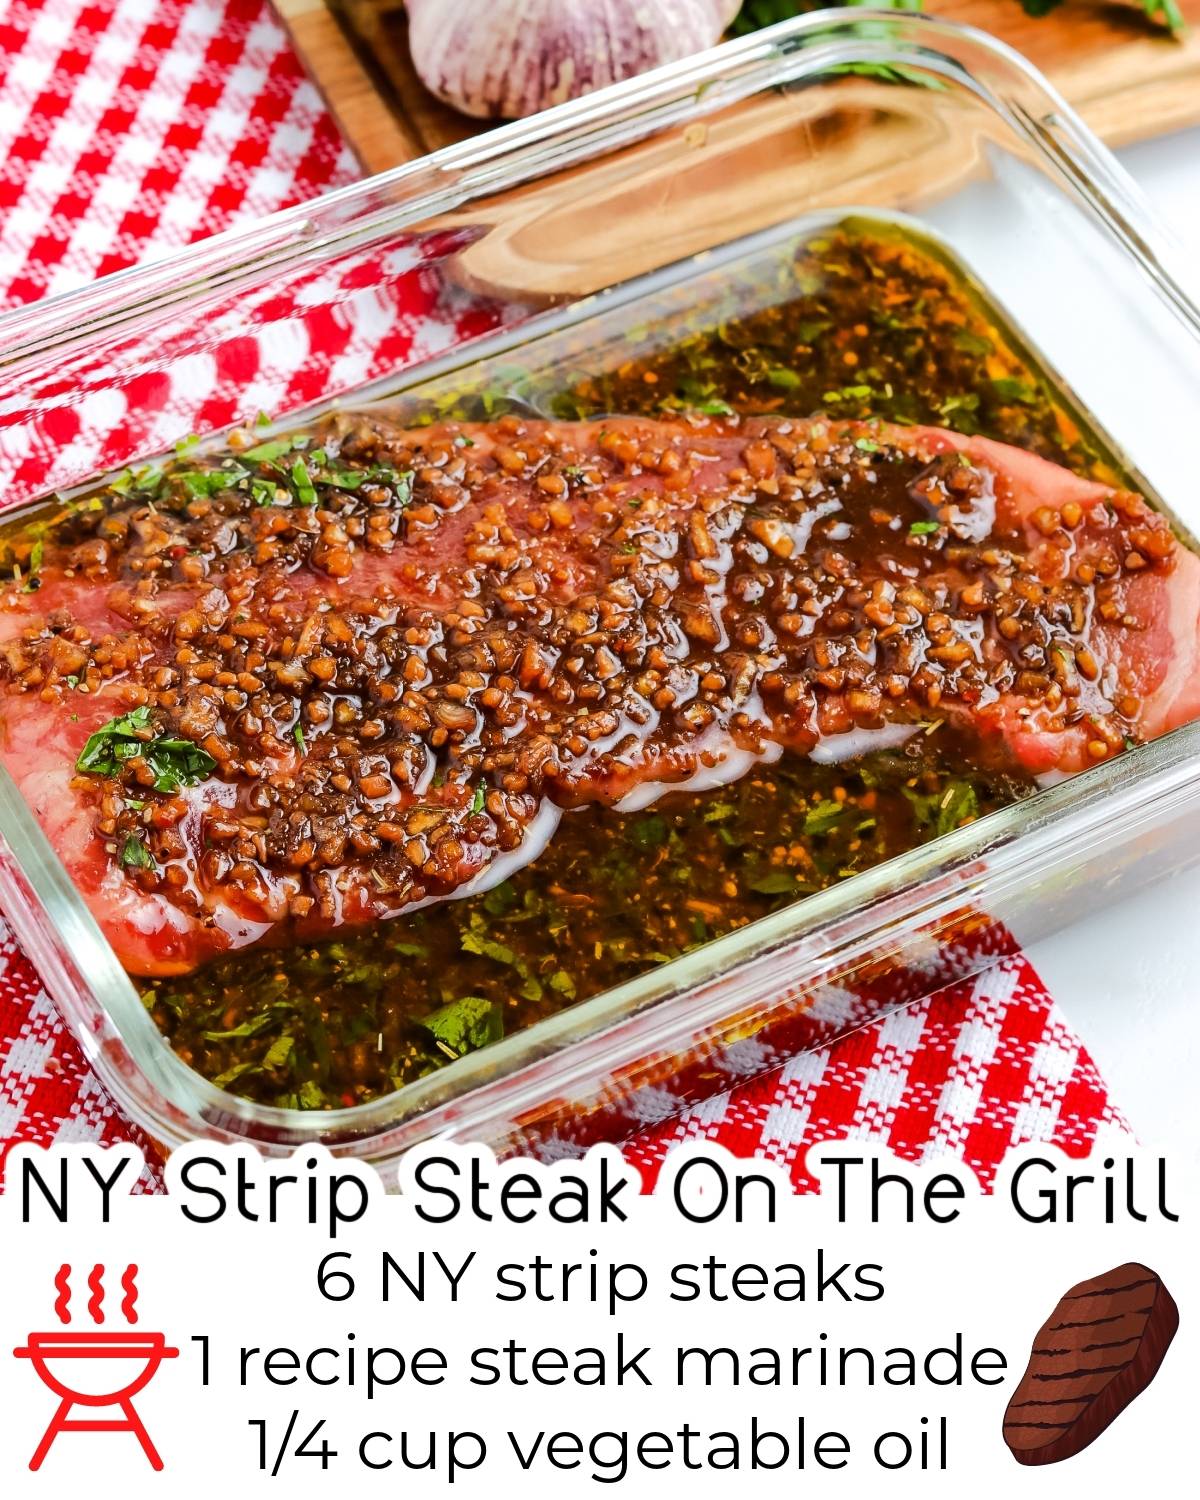 Grilled New York Strip Steak ingredients